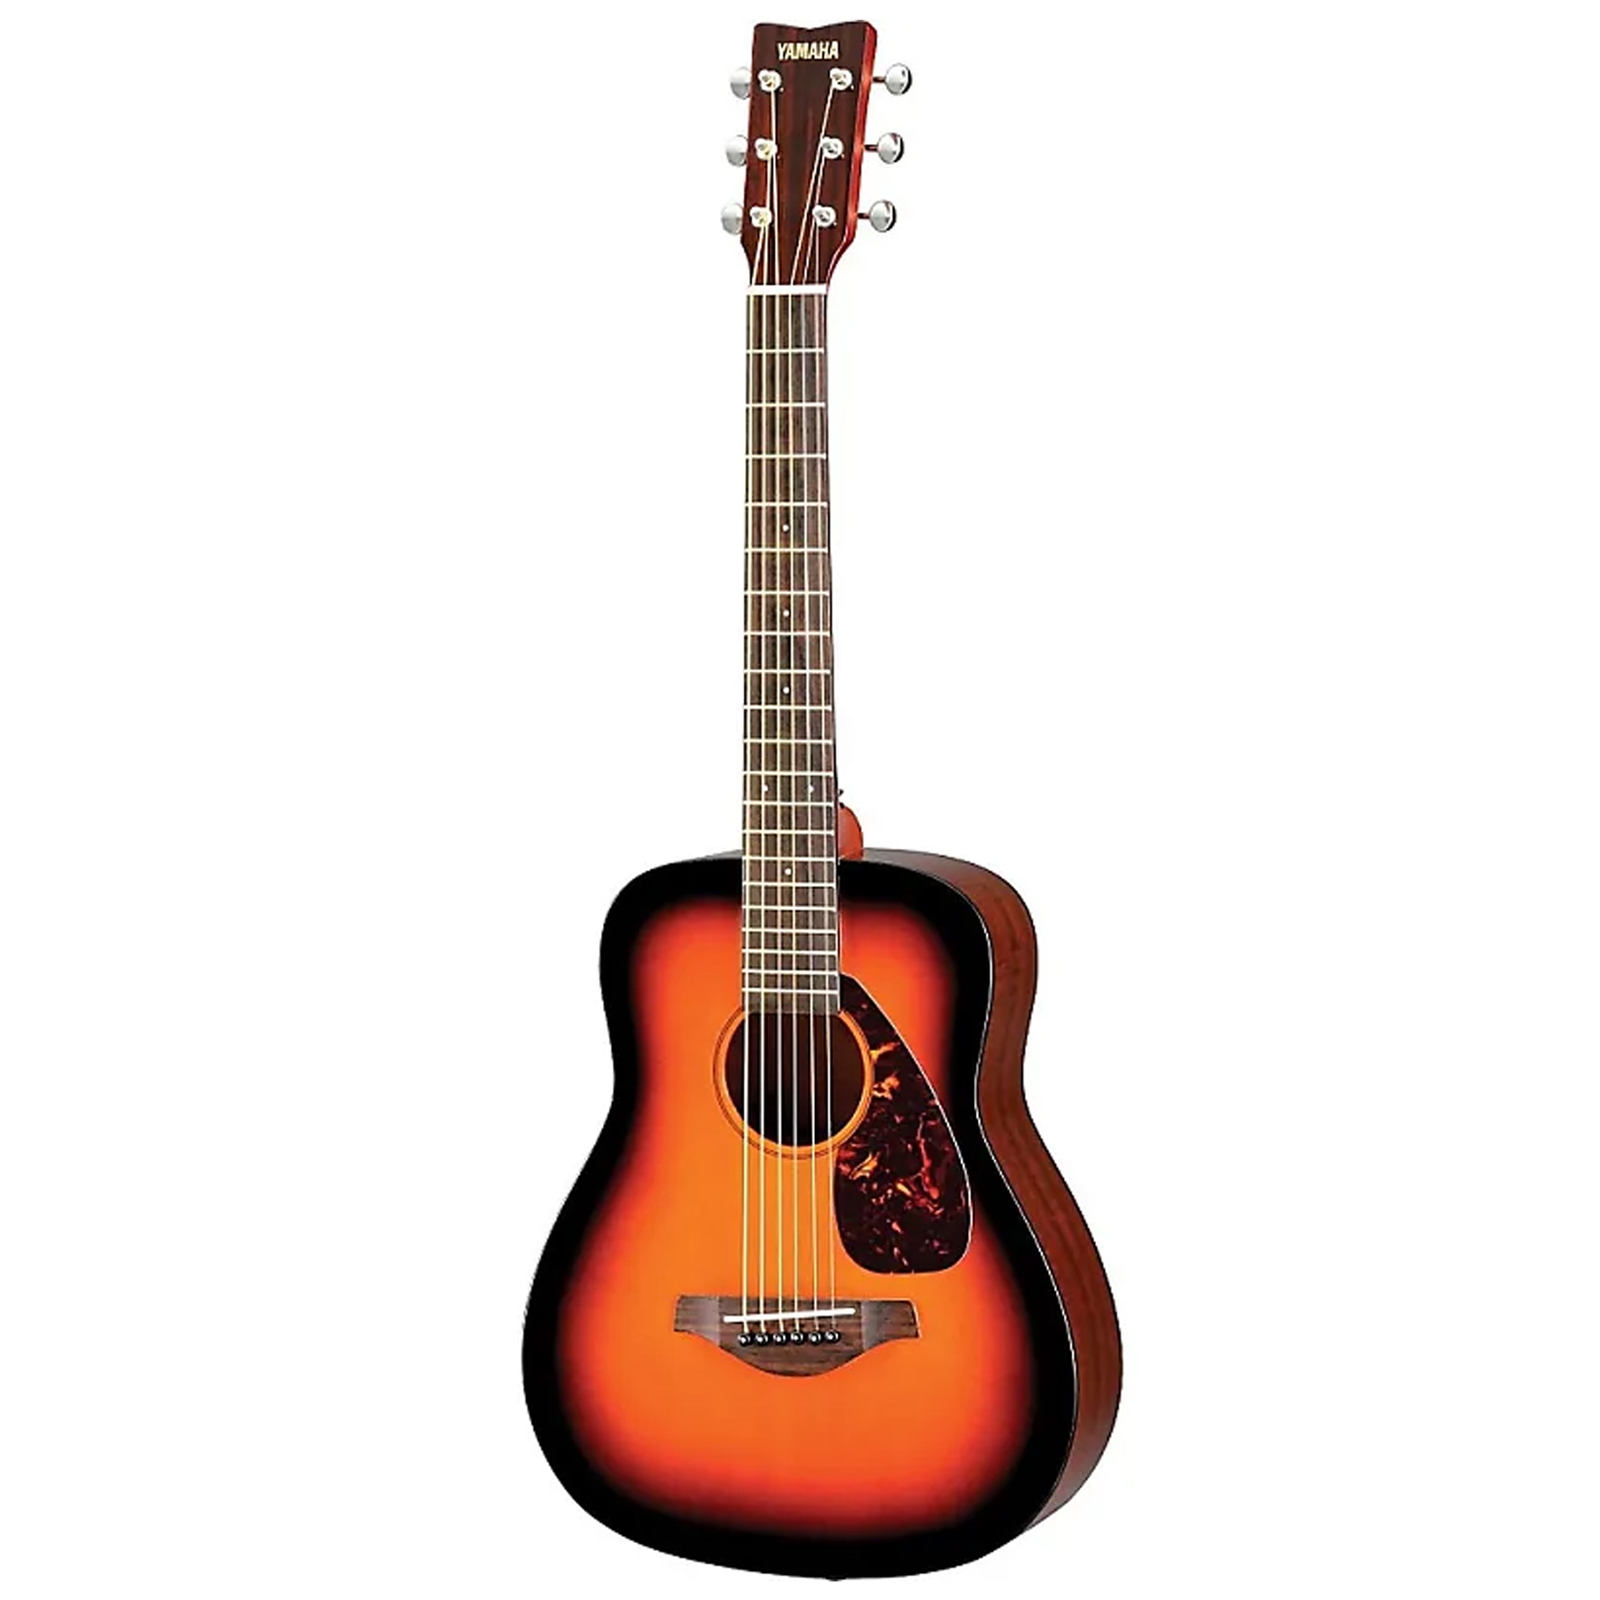 Yamaha JR2 Small Body Acoustic Guitar